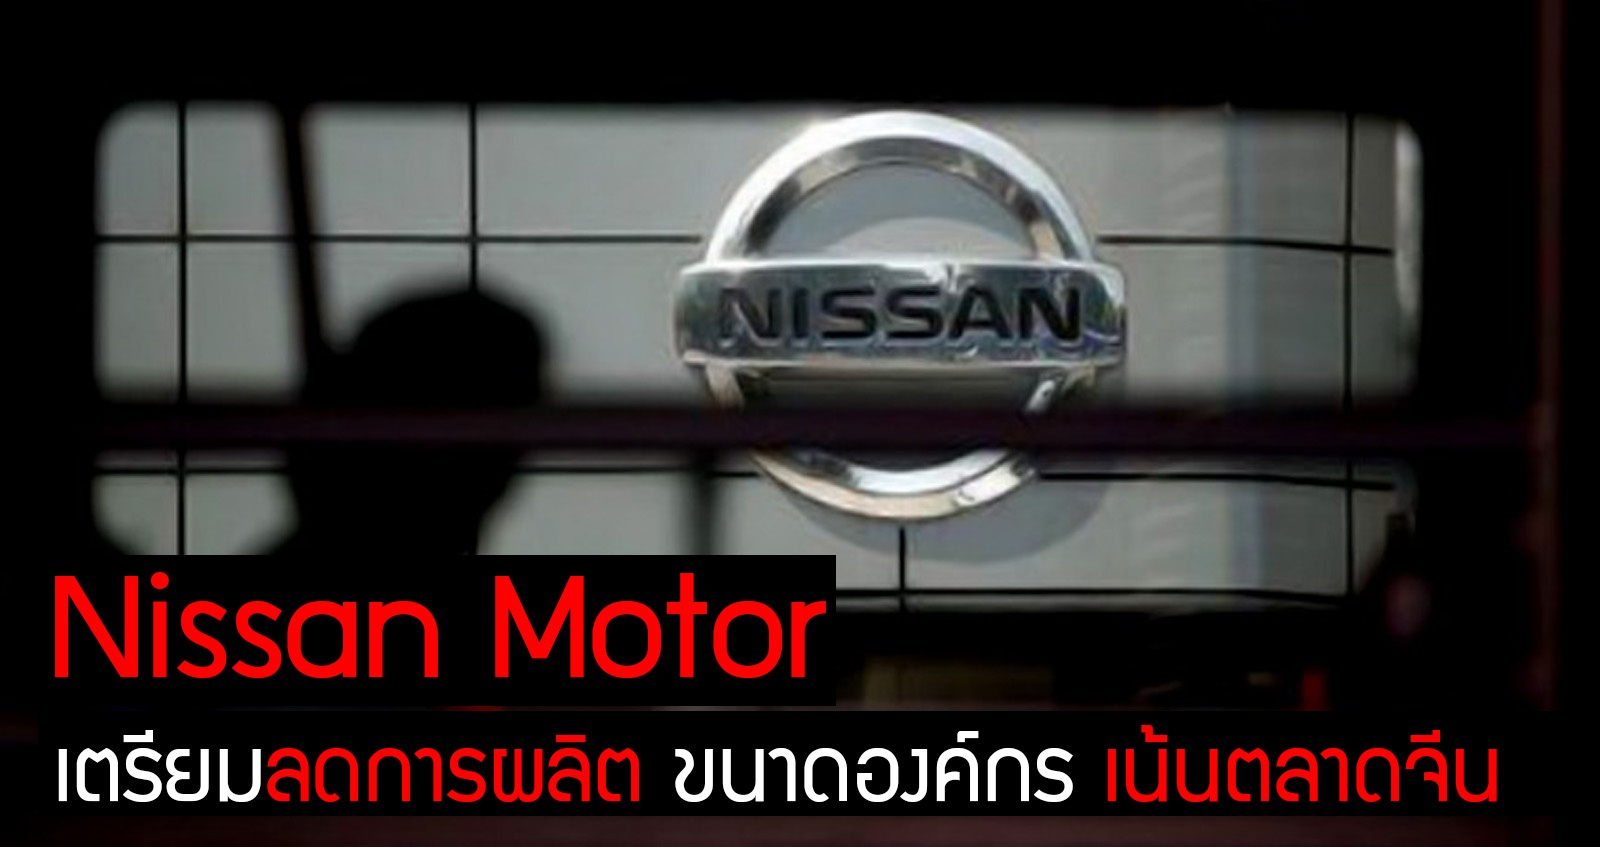 Nissan Motor ลดการผลิต ลดองค์กร มุ่งเน้นตลาดจีน